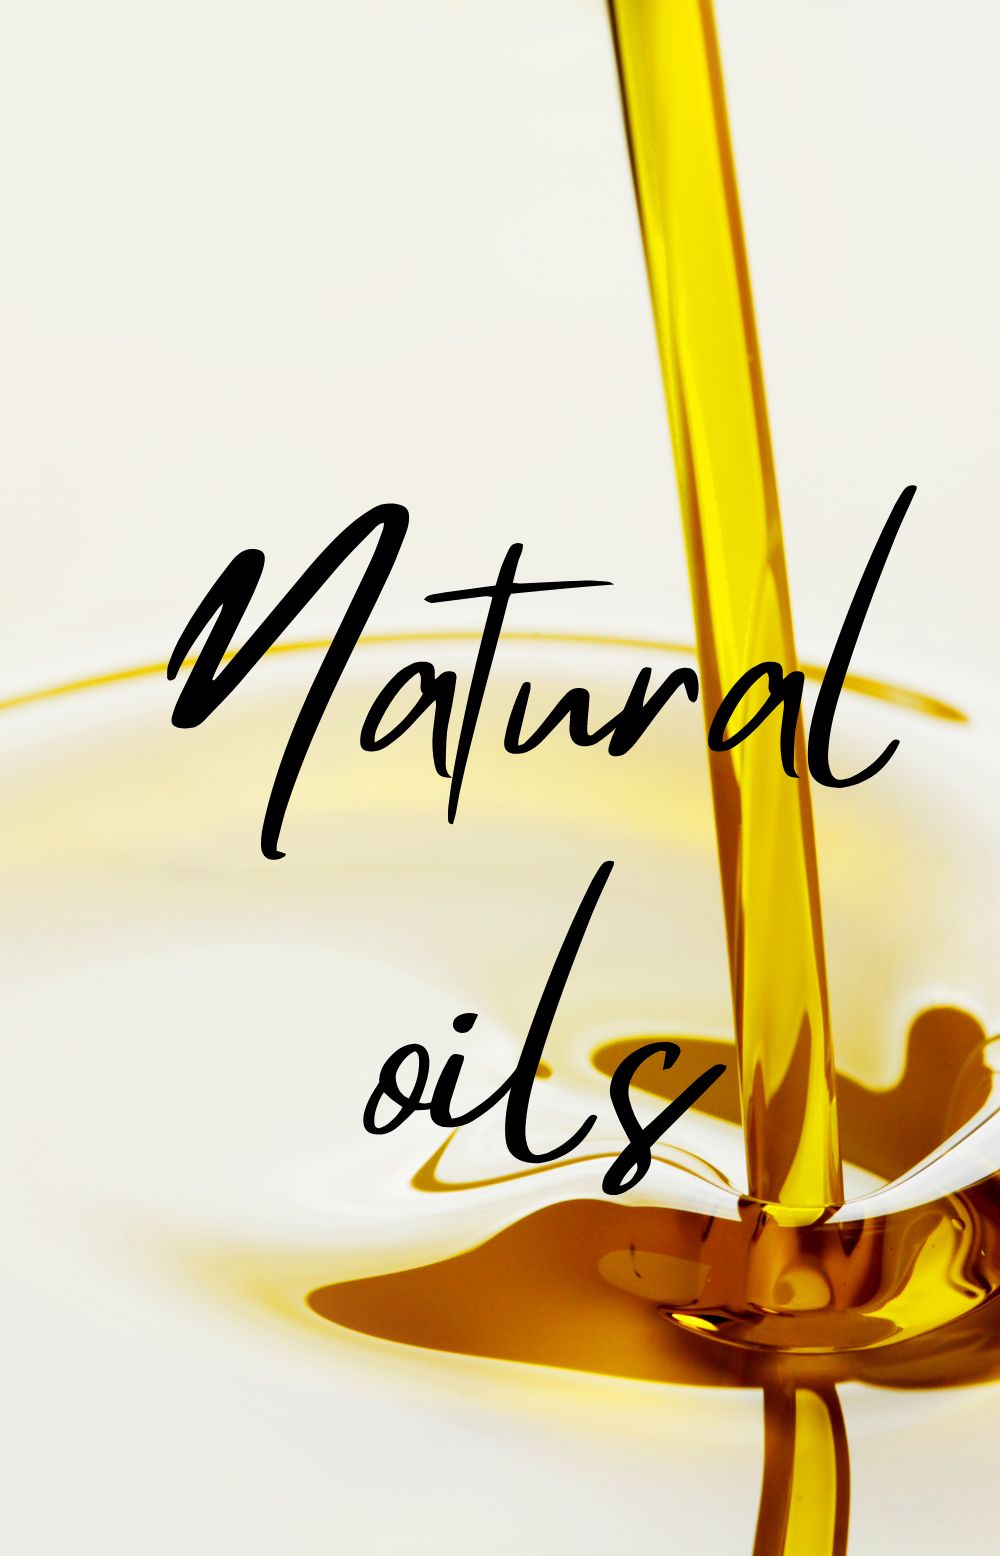 Natural Oils